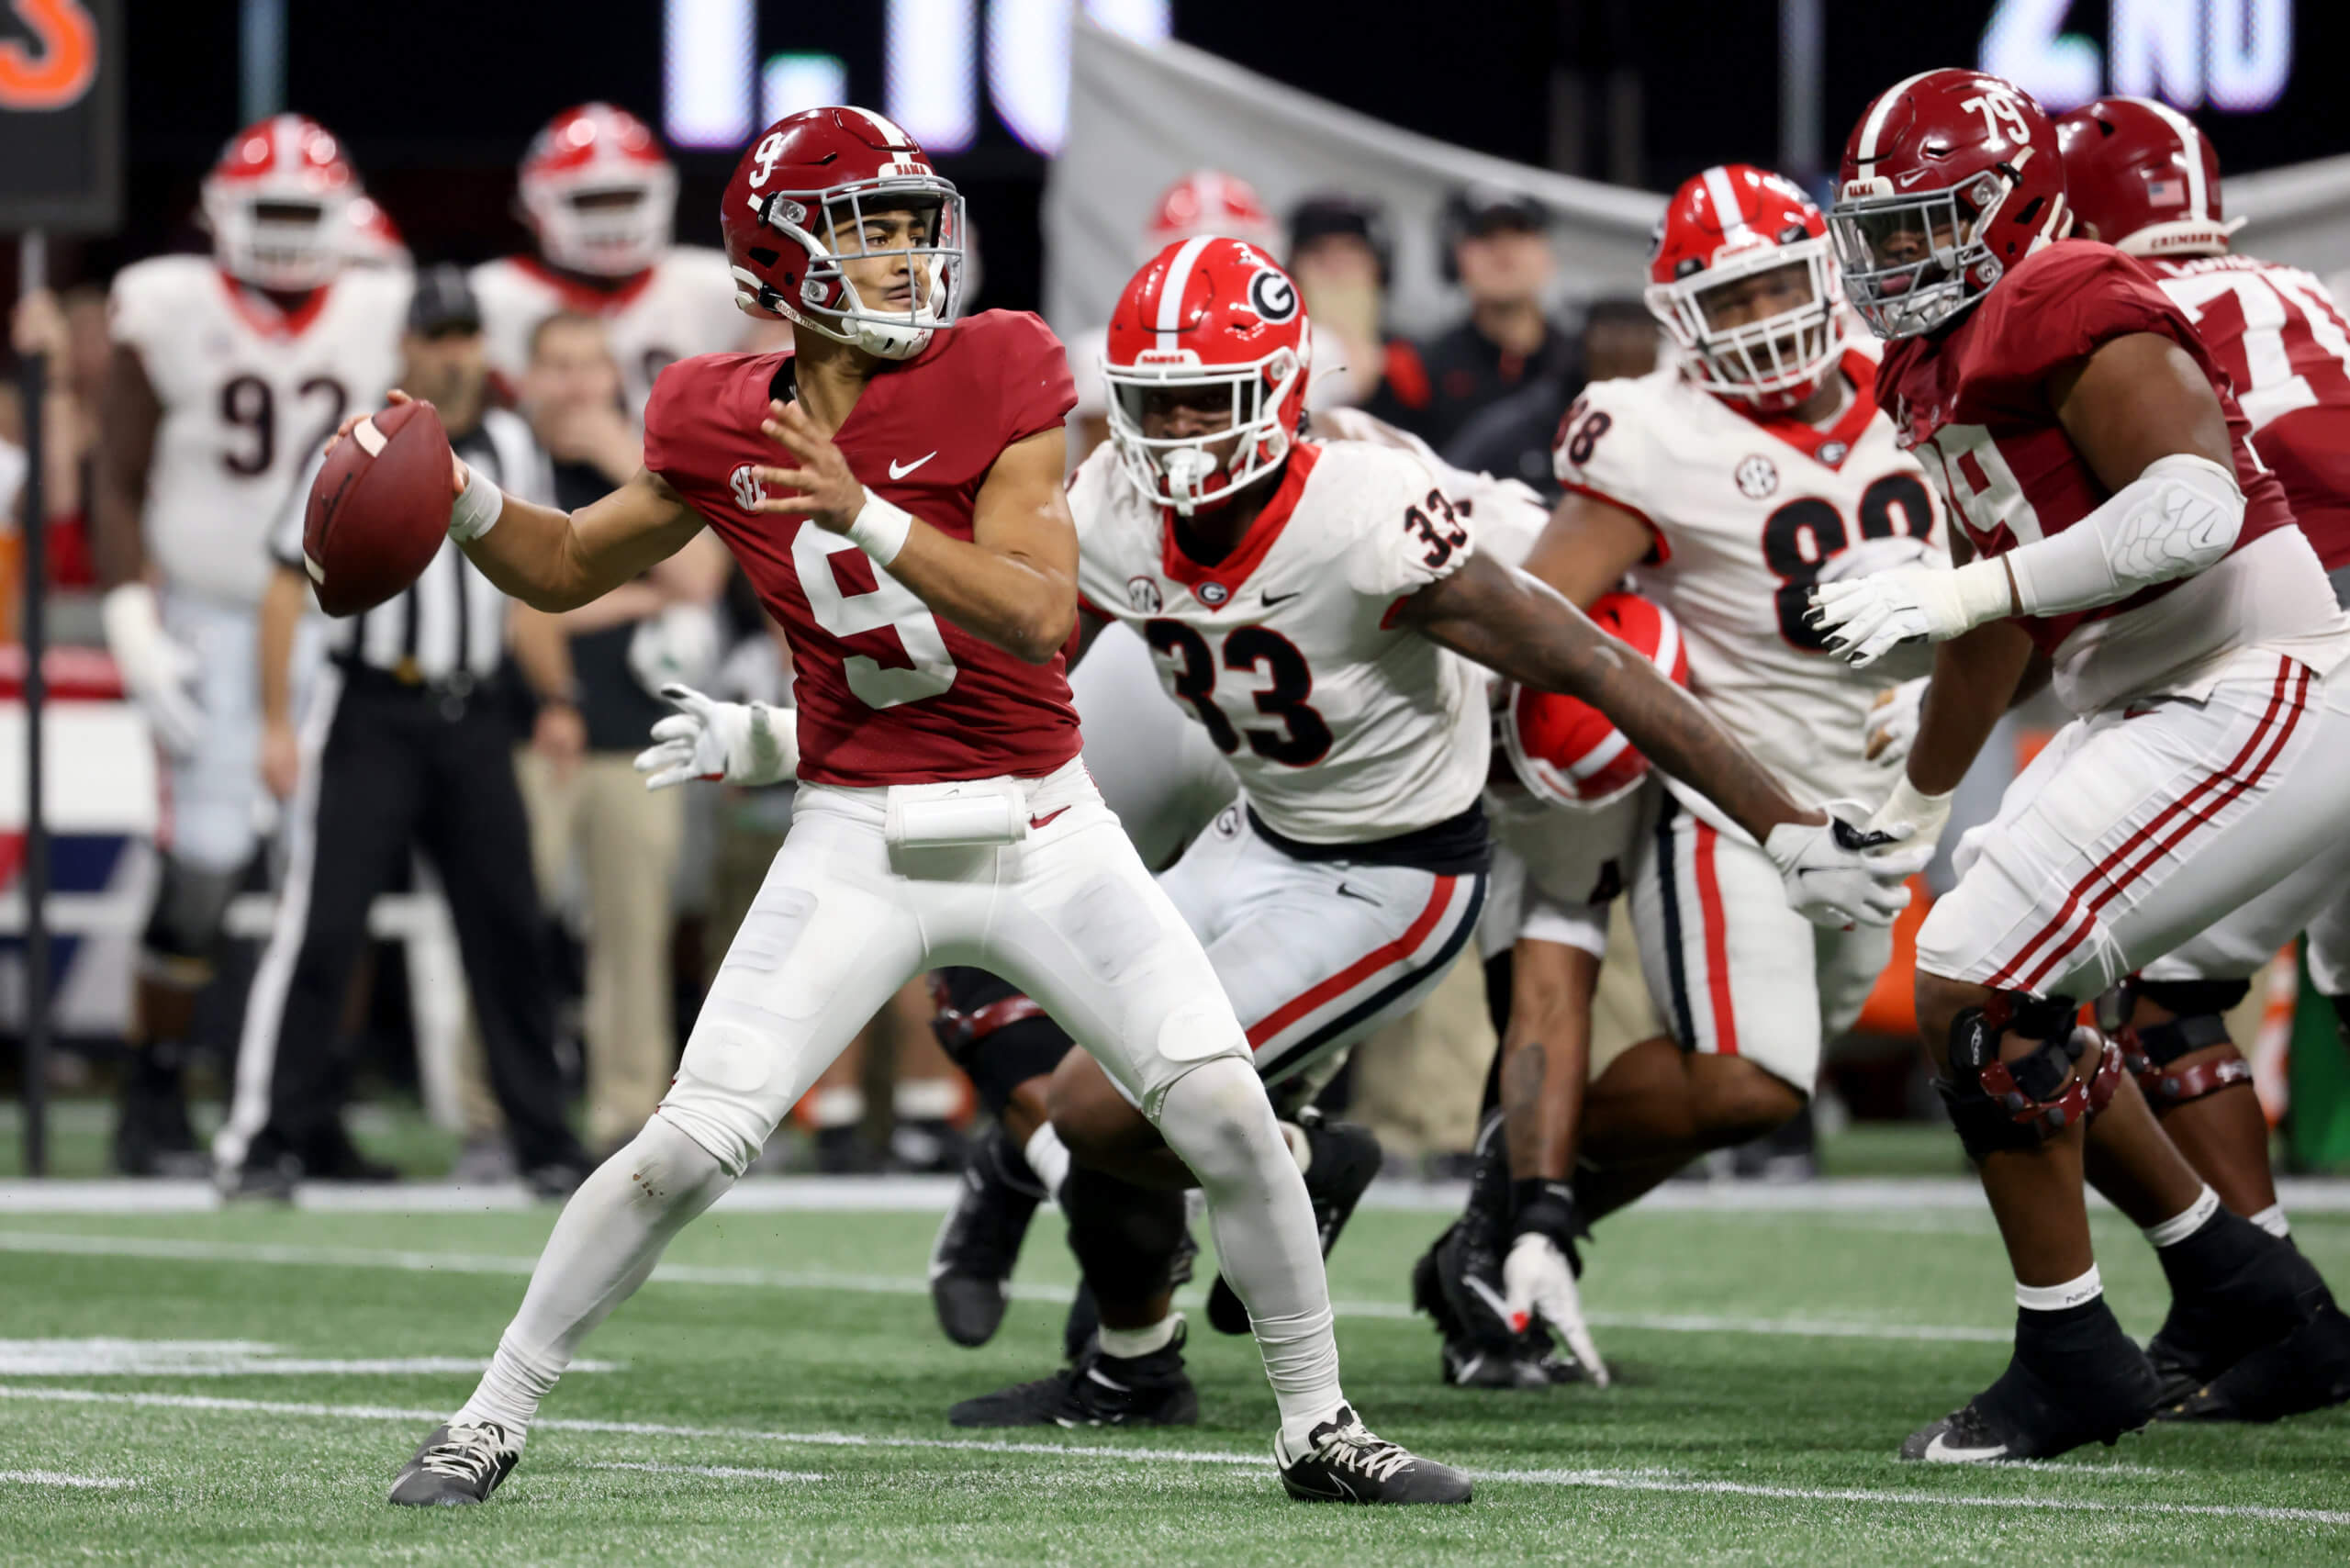 2022 National Championship Game preview, odds, more for Georgia vs. Alabama